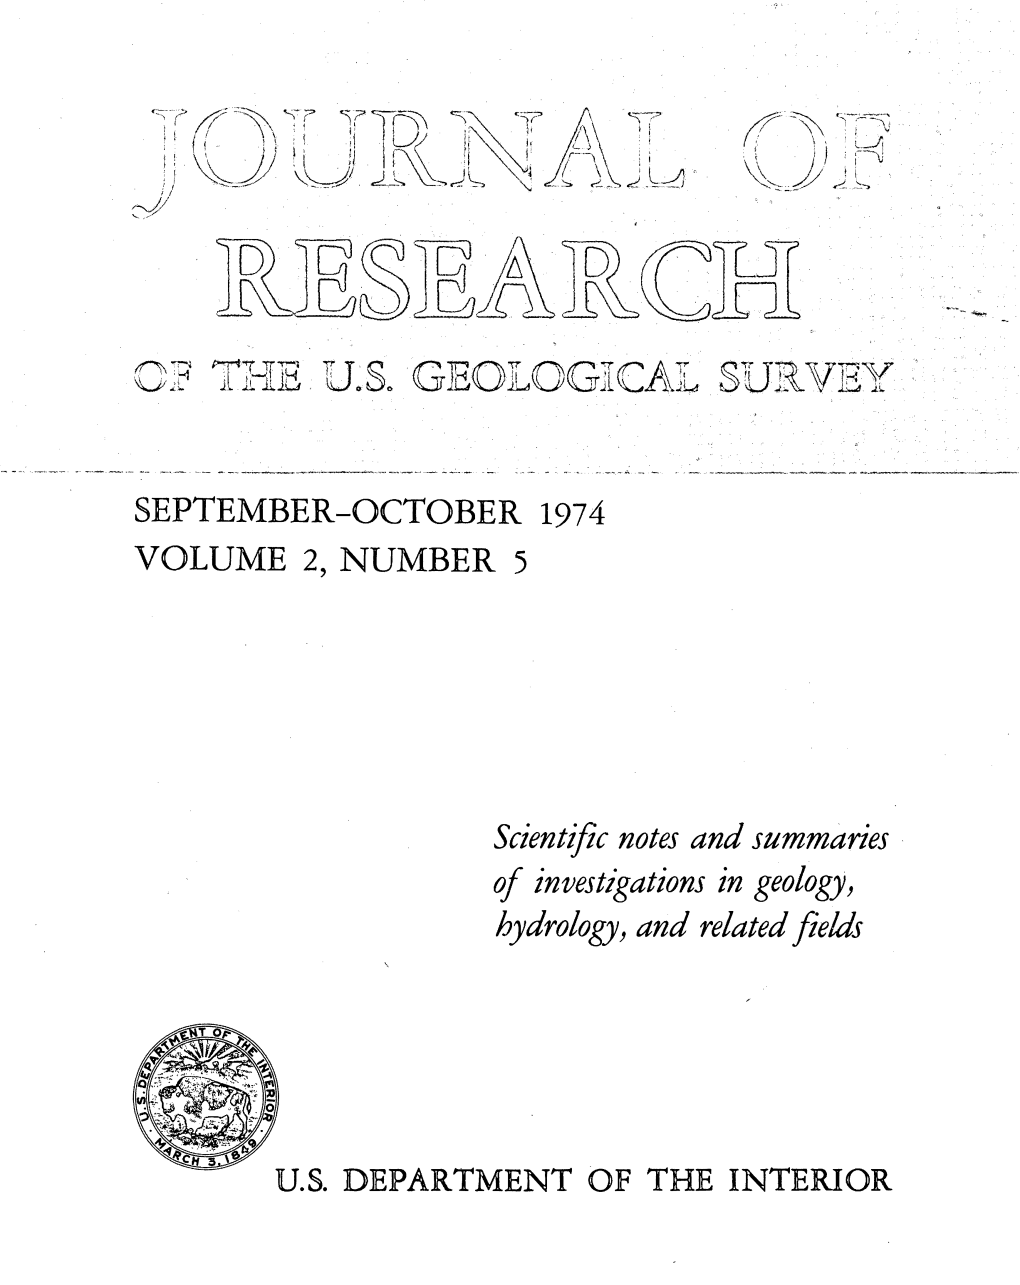 SEPTEMBER-OCTOBER 1974 VOLUME 2, NUMBER 5 Scientific